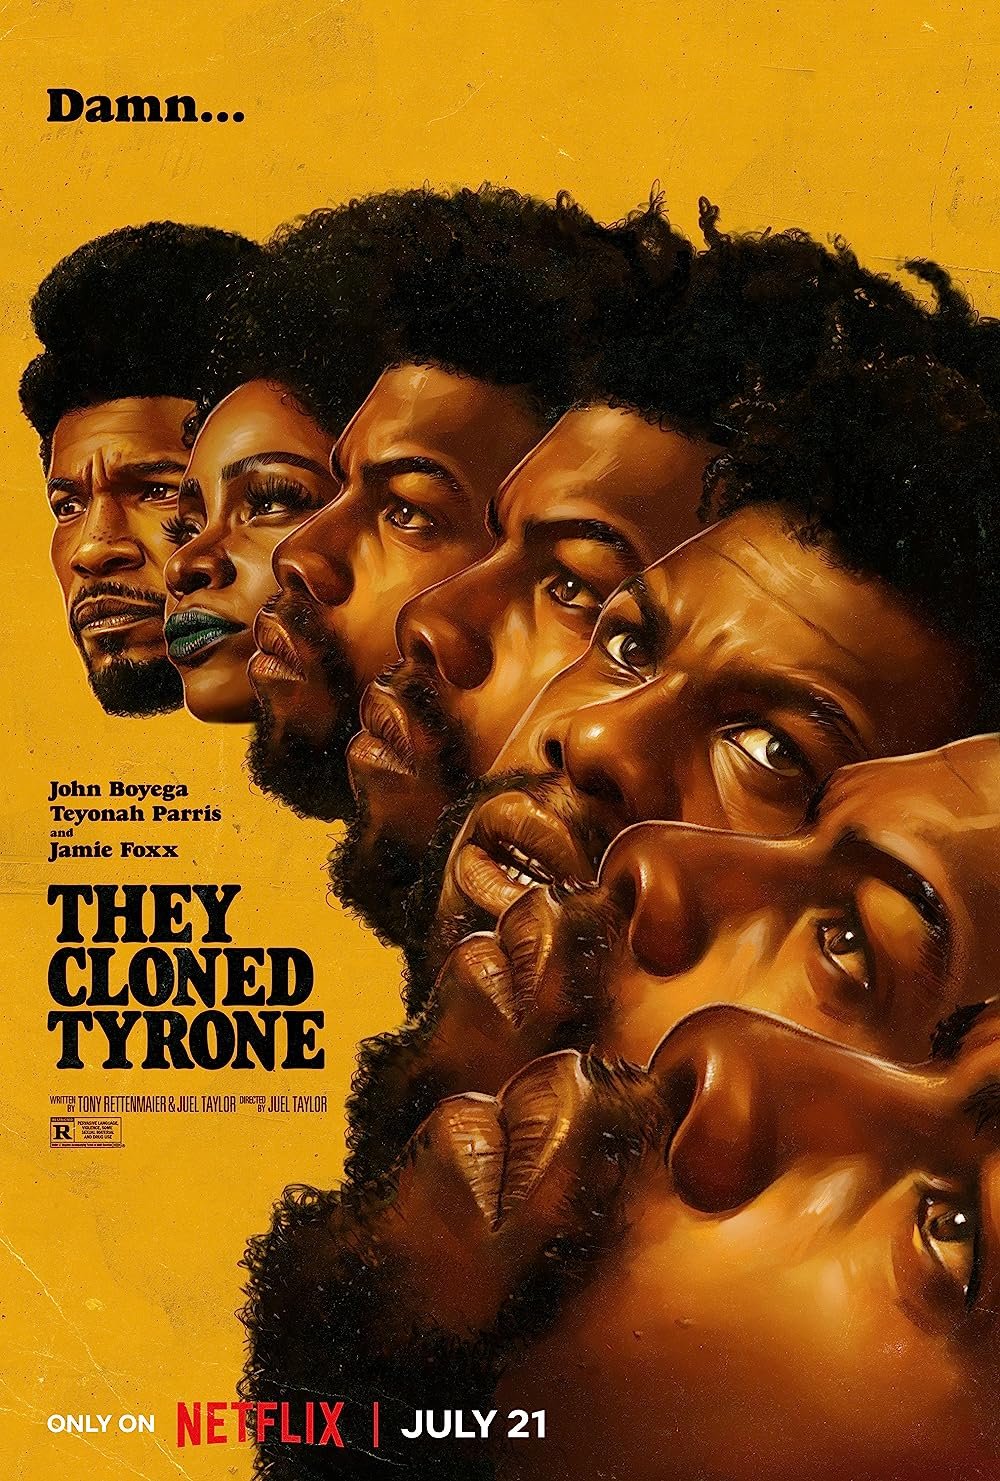 They Cloned Tyrone image © Netflix